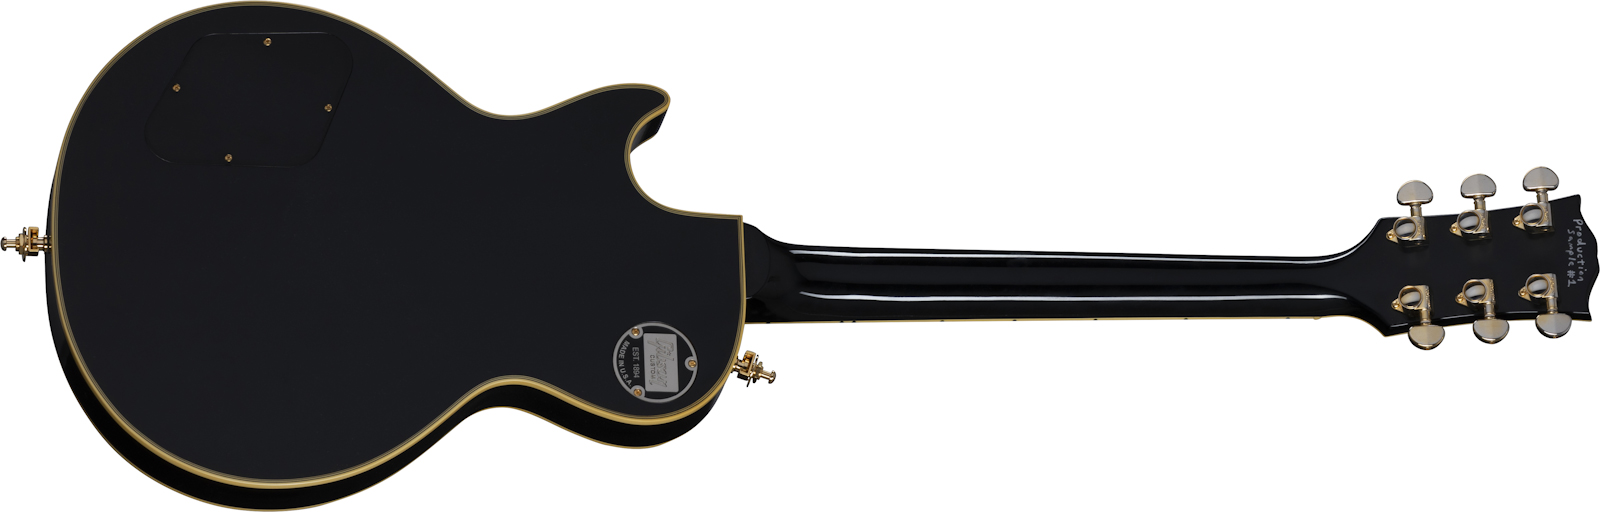 Gibson Custom Shop Peter Frampton Les Paul Custom Phenix Signature 3h Ht Eb - Vos Ebony - Single cut electric guitar - Variation 1